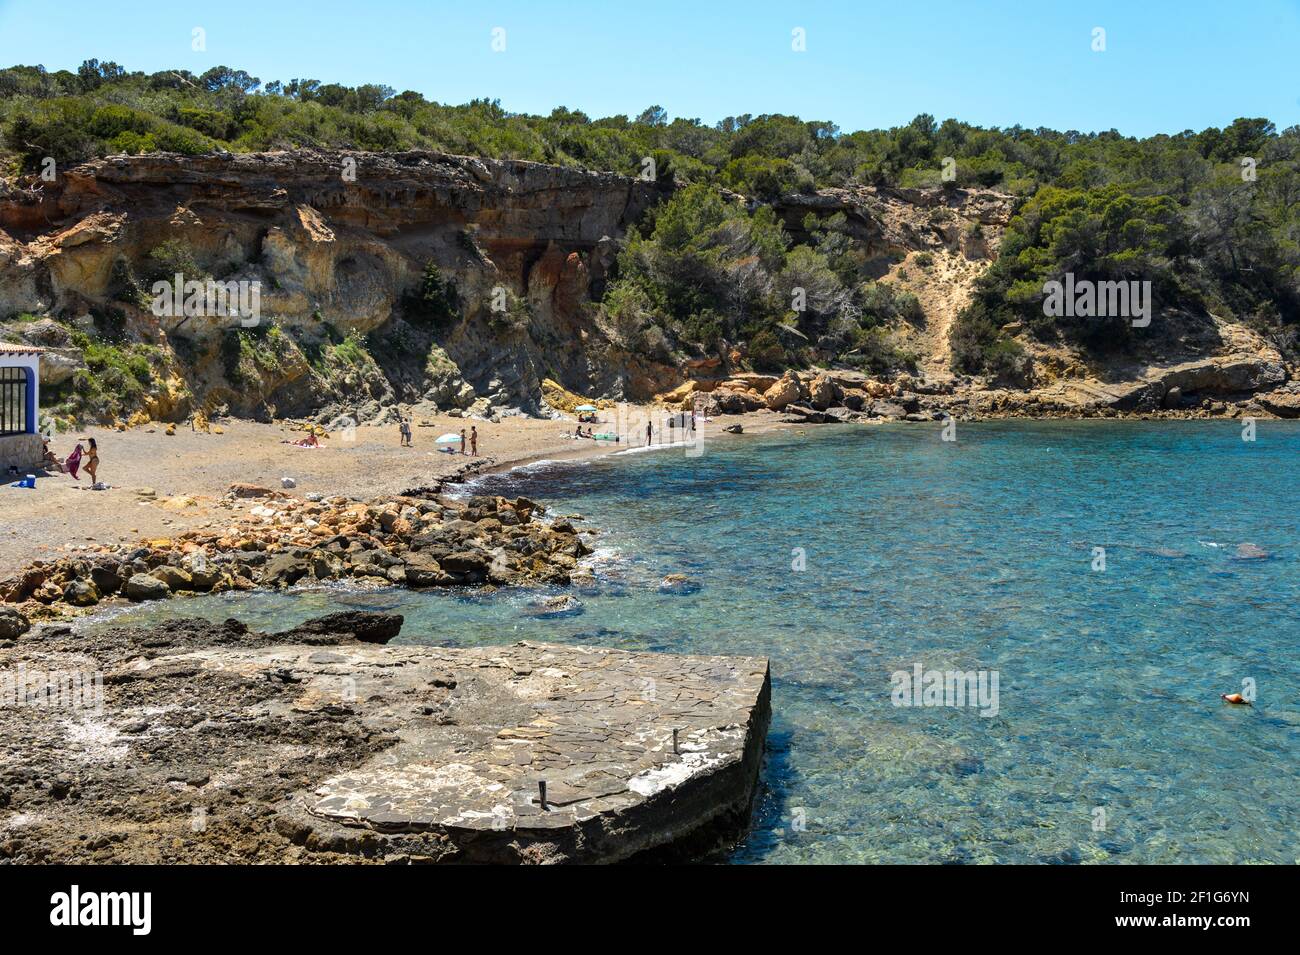 Cala Xarraca, Ibiza, Spain - May 28, 2020: Cala Xarraca one of the best known beaches on the north coast of Ibiza. A steep coast with coarse sand beac Stock Photo